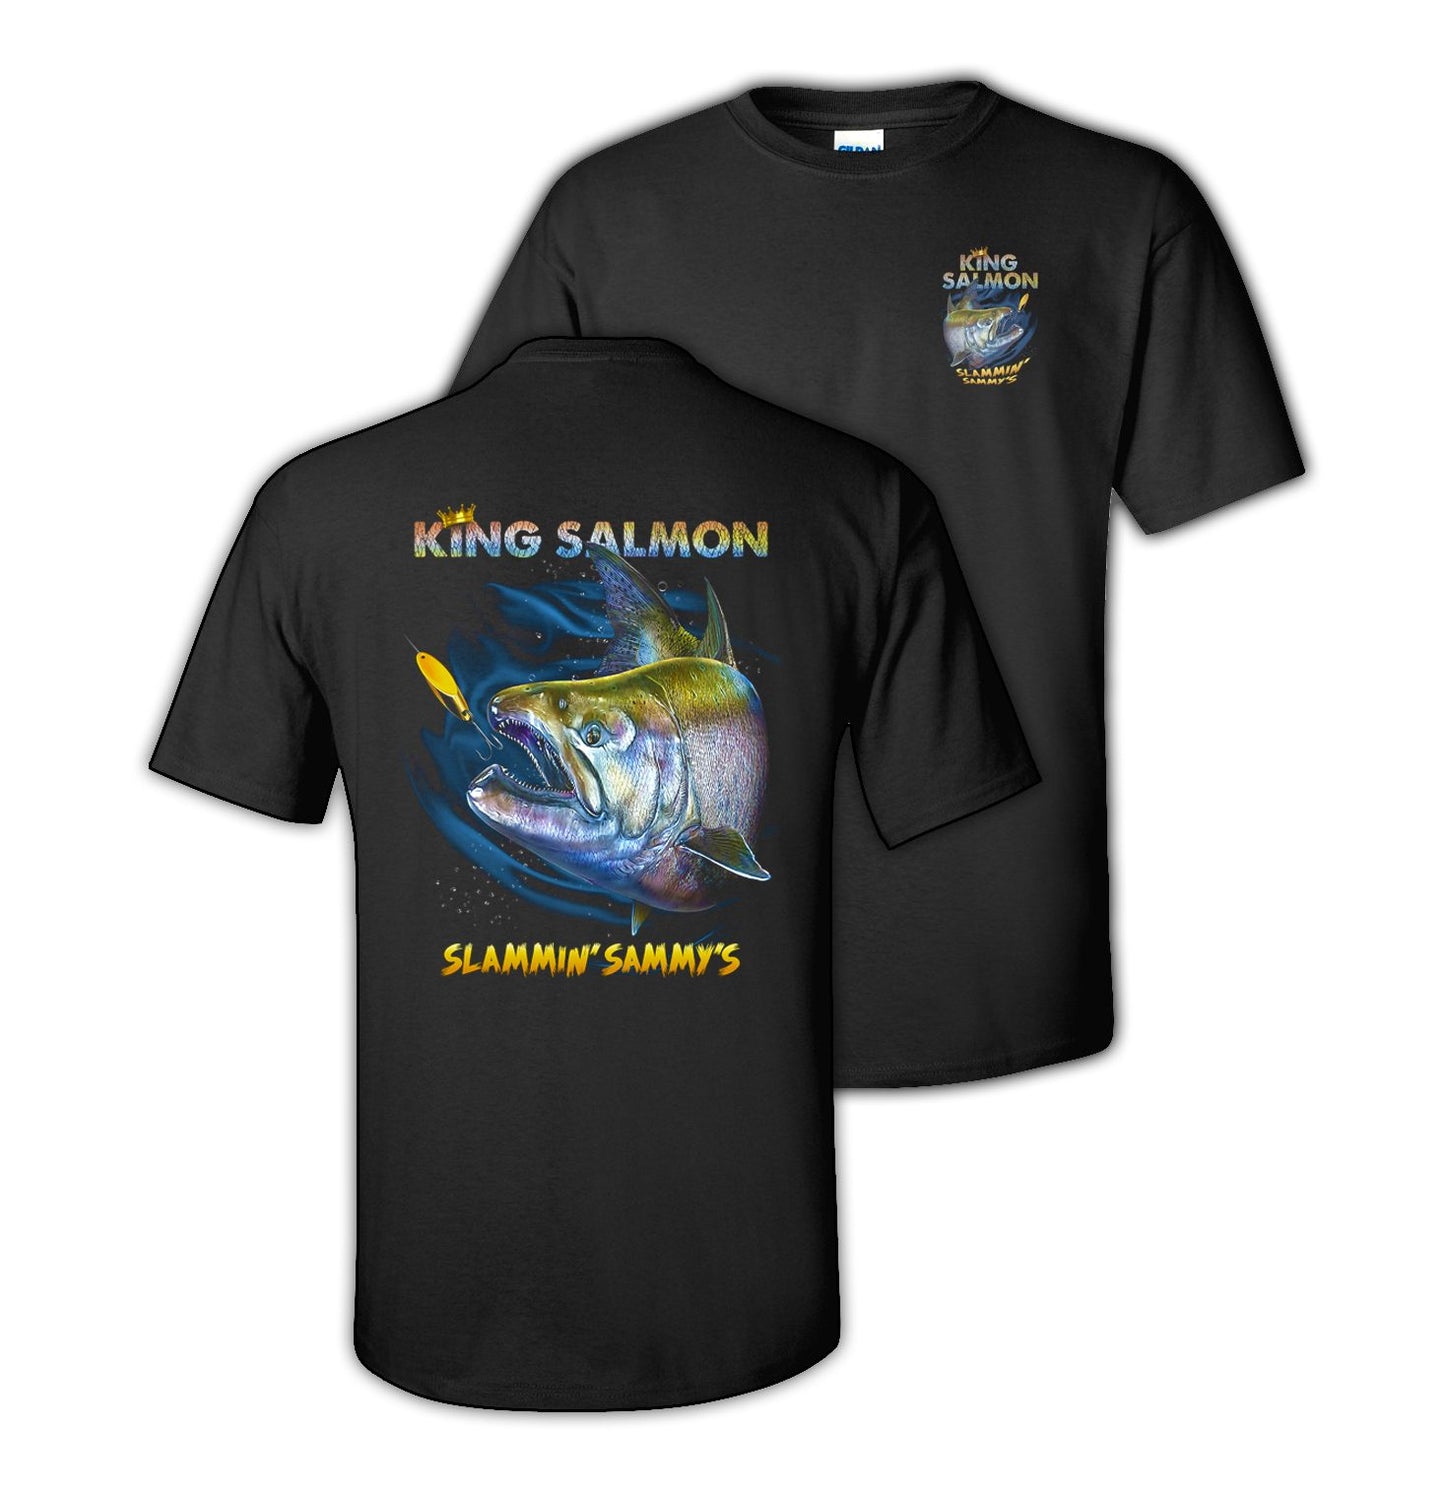 King Salmon “Slammin’ Sammy’s” Two- Sided Short Sleeve T-Shirt